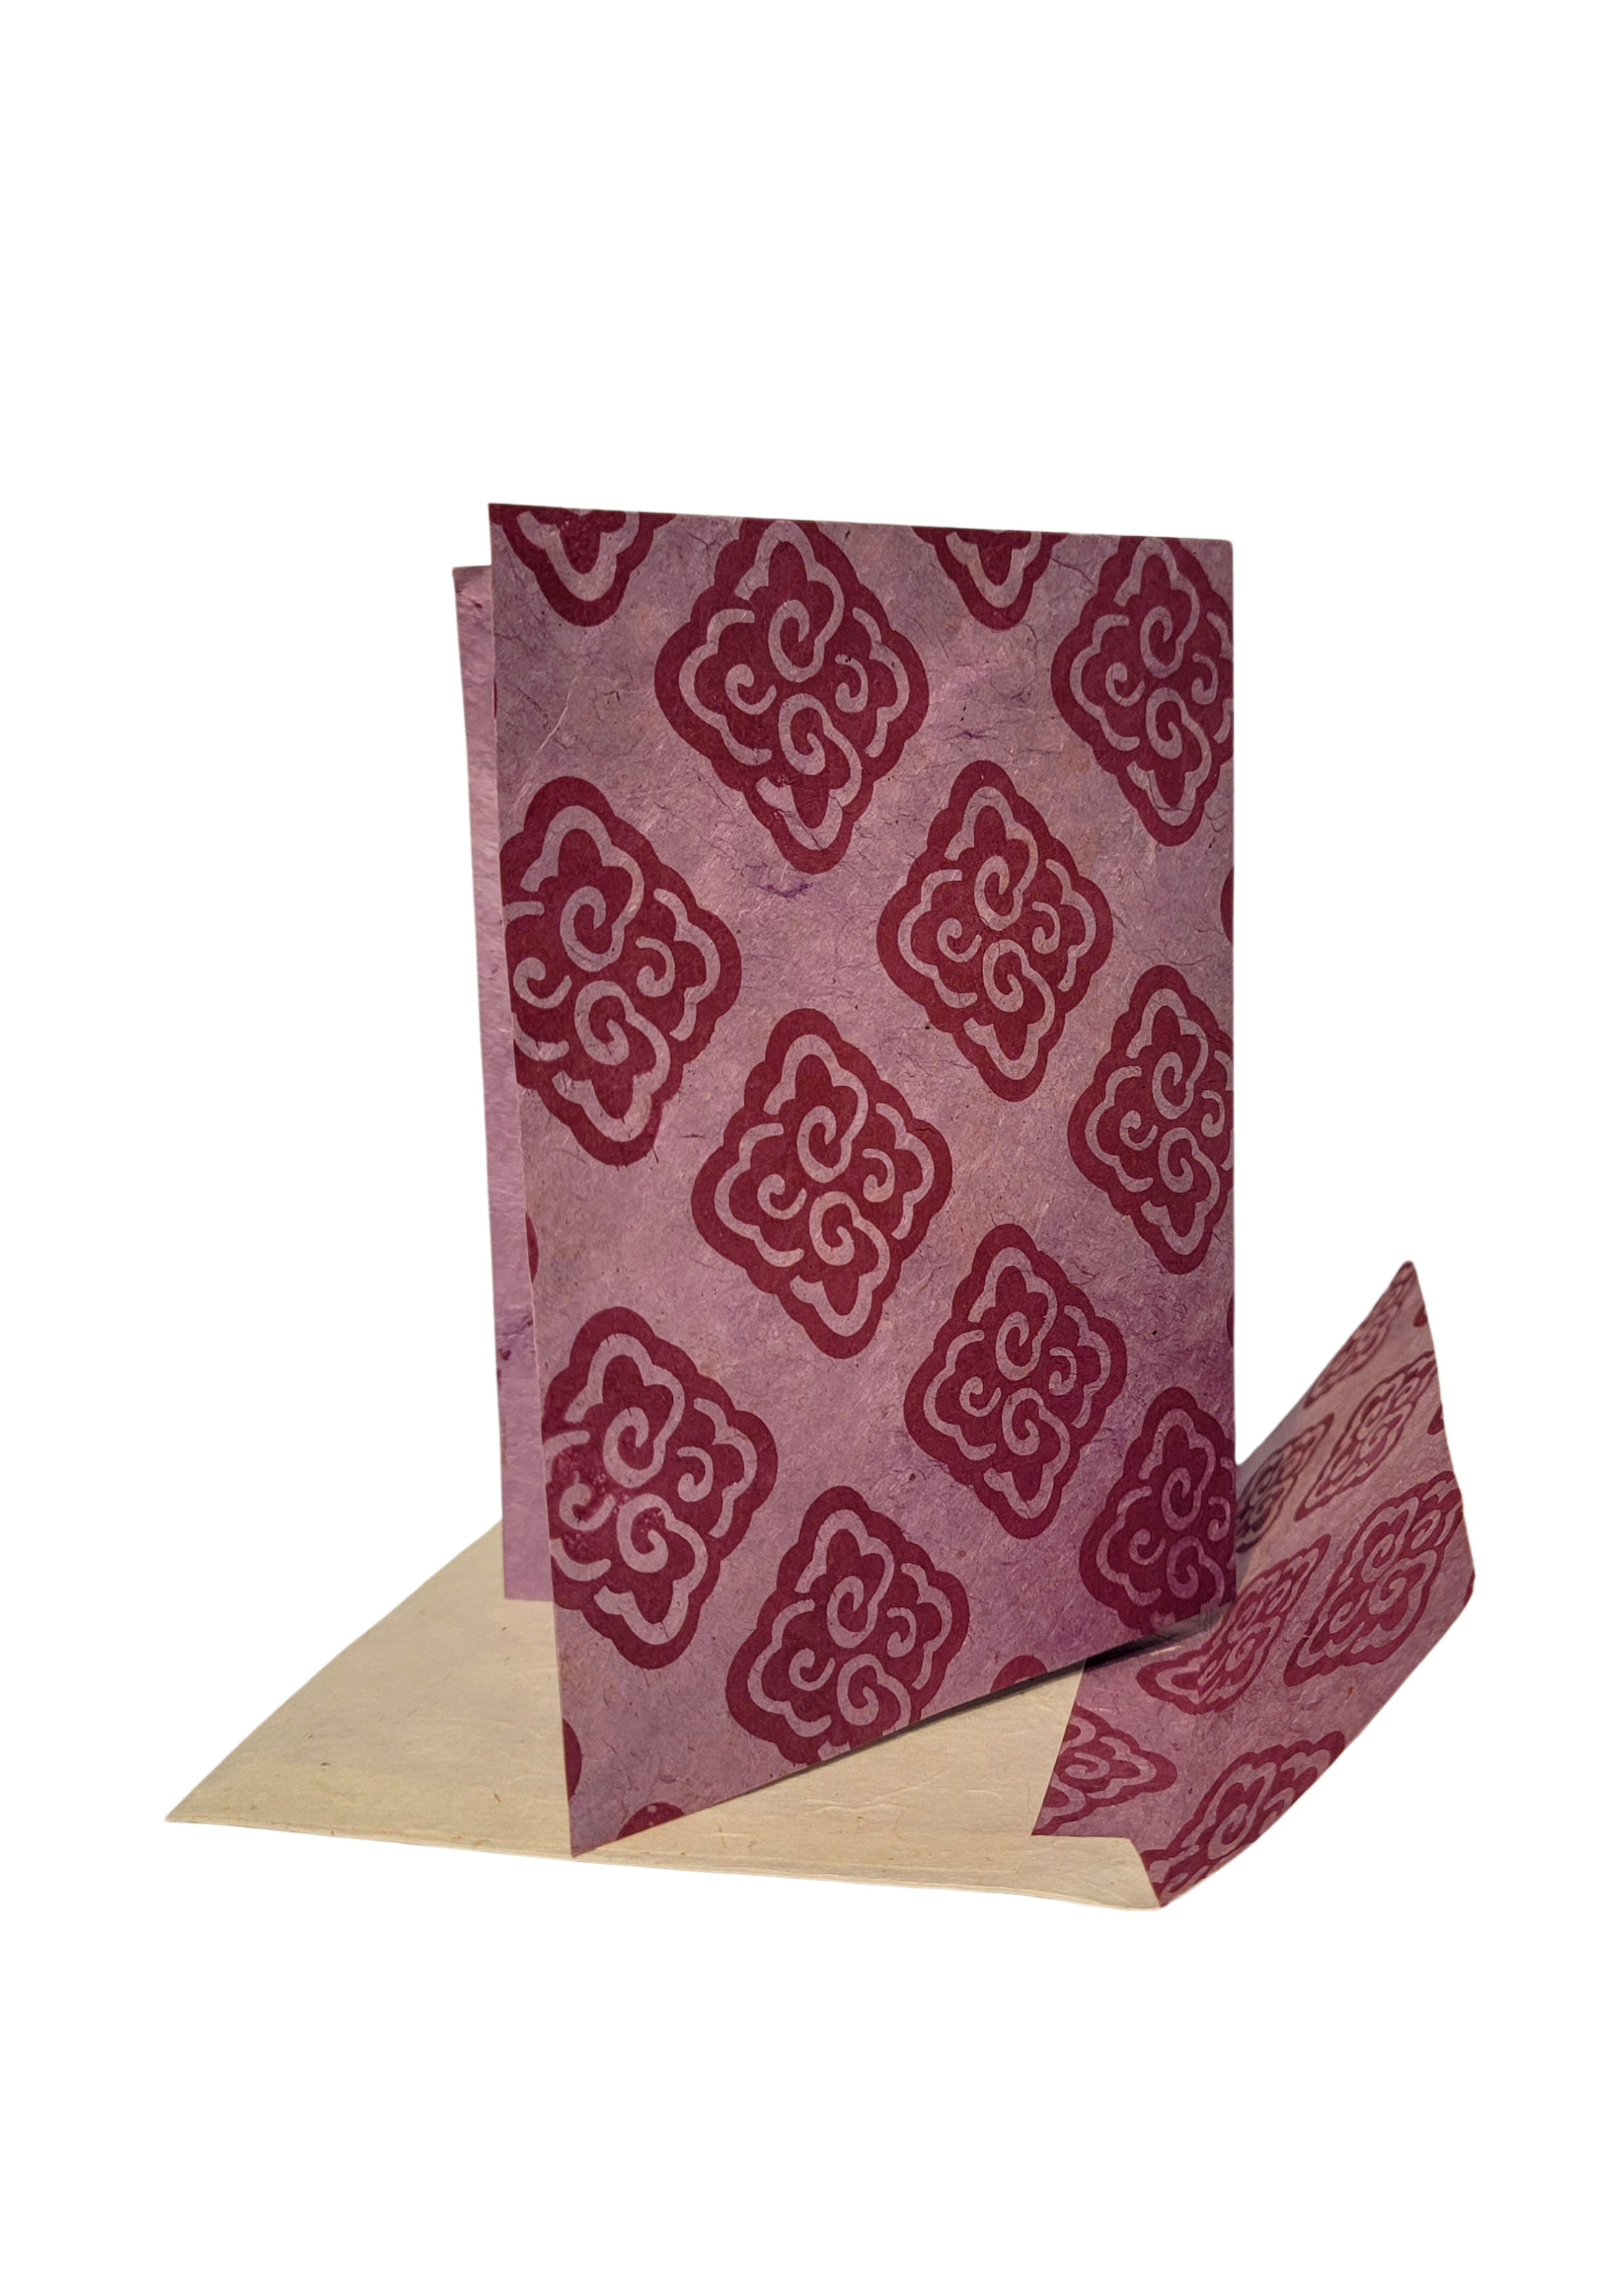 Handmade paper cards